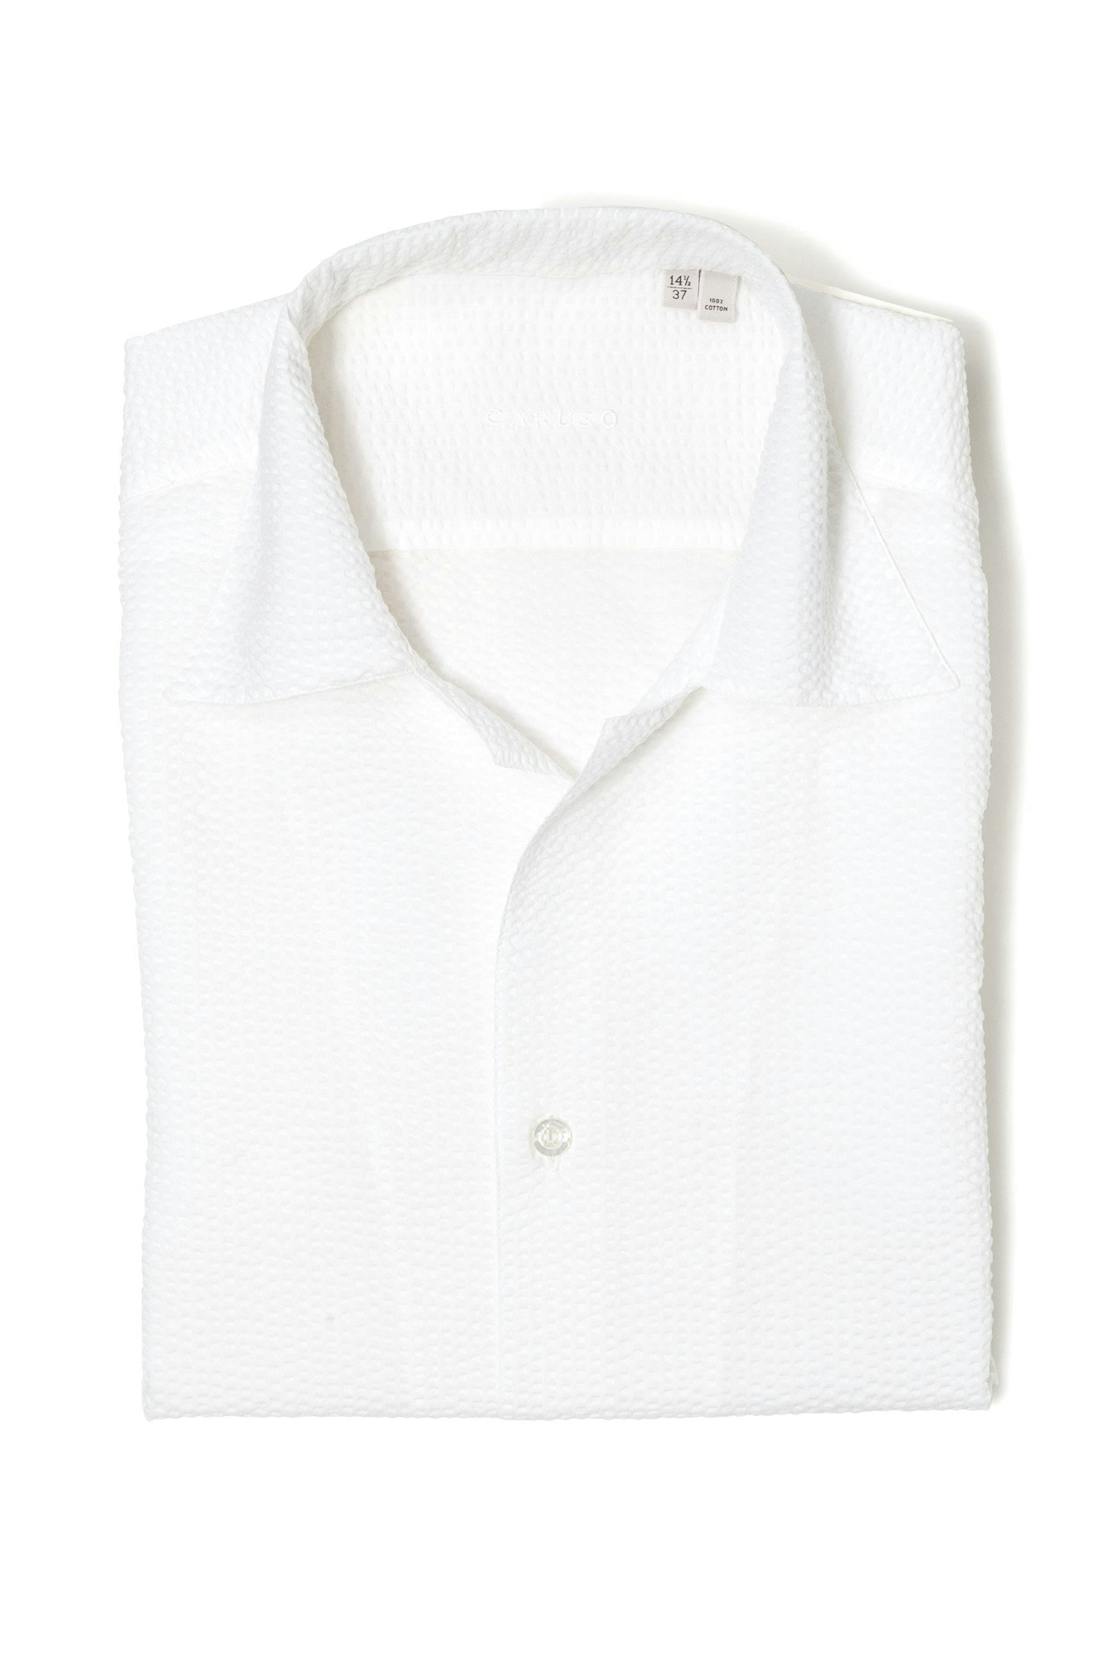 Caruso AFT68 29C184 White Cotton Seersucker Short Sleeve Shirt